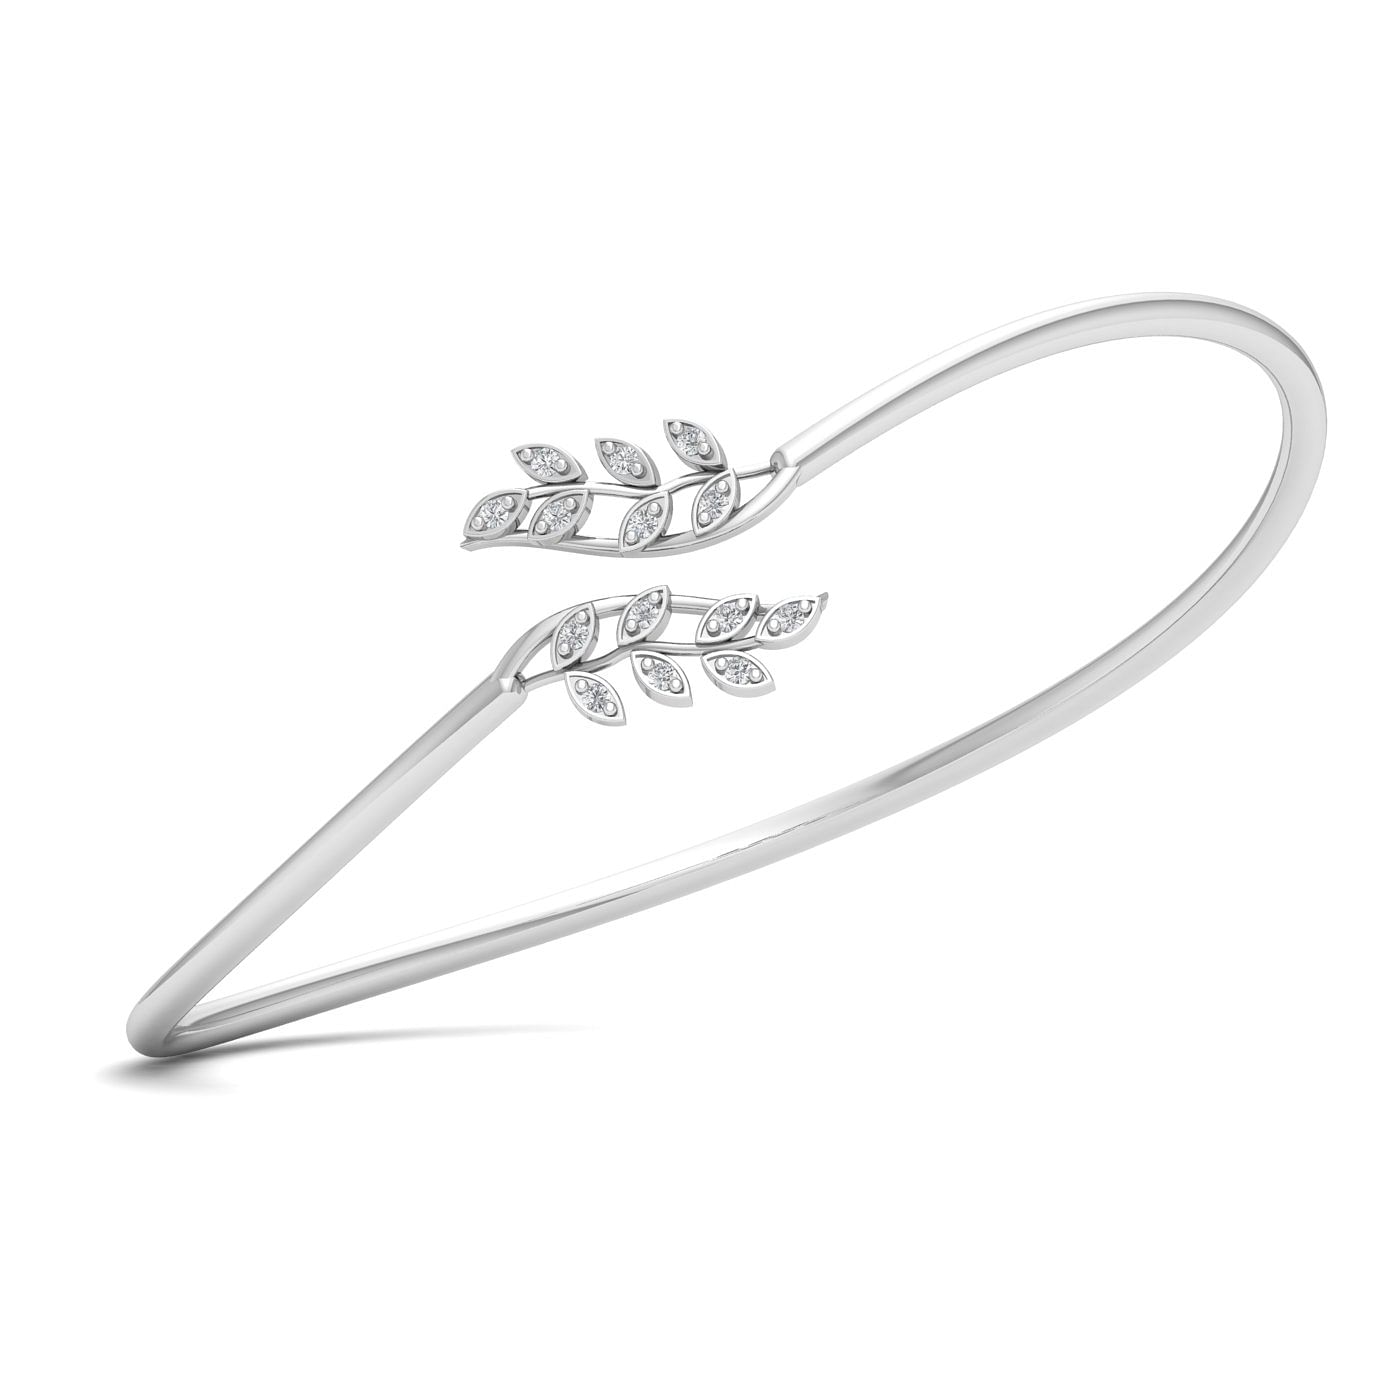 Leofe Diamond Bracelet Daily Wear Design For Women